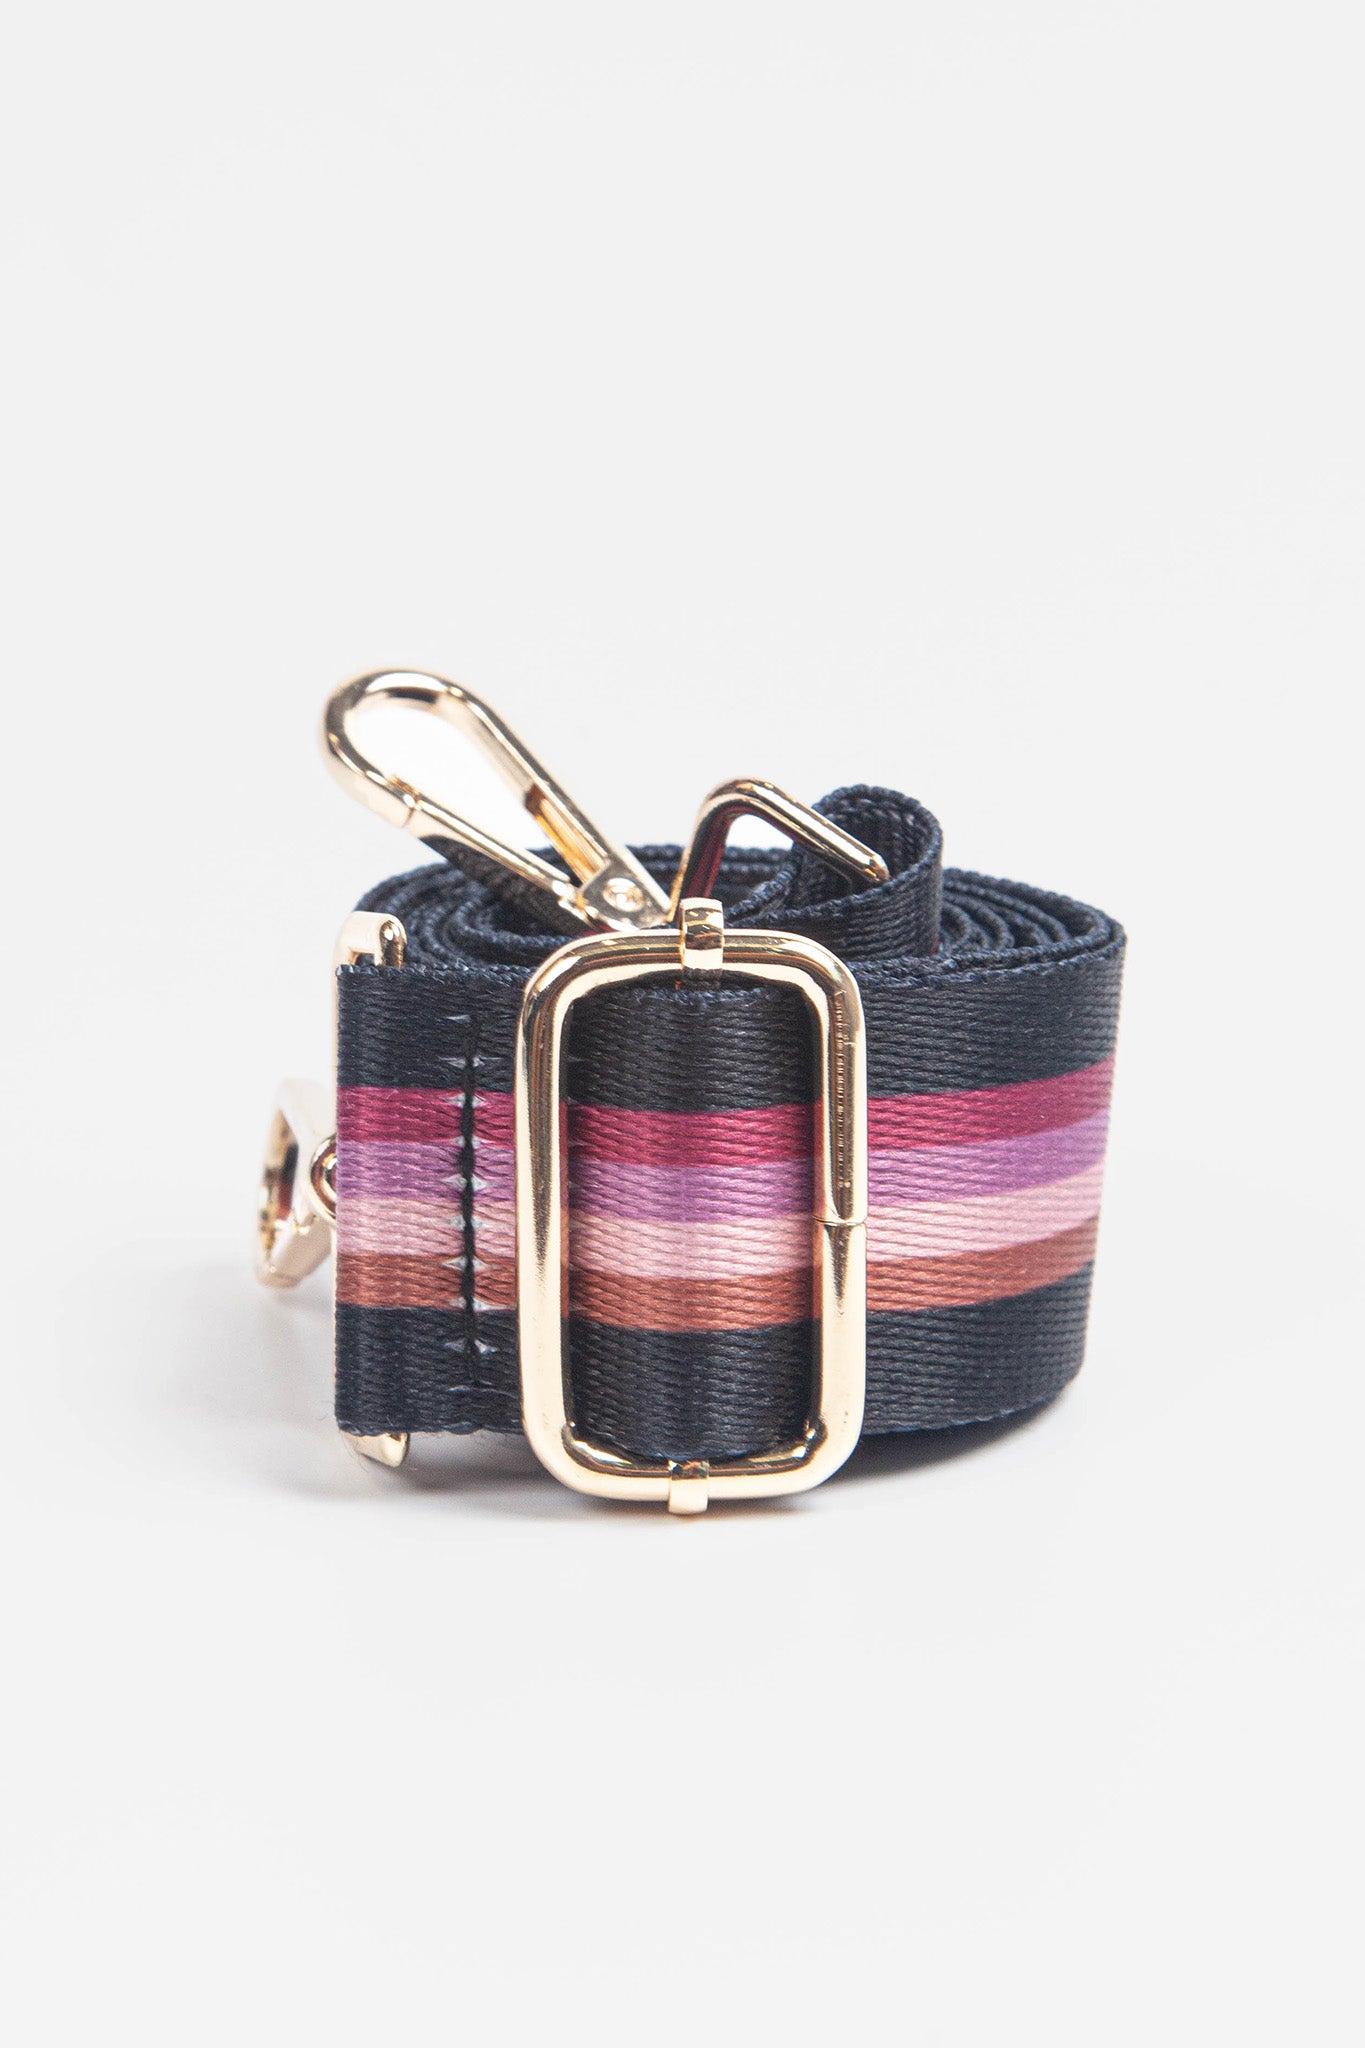 Bag Strap - Pink And Rose Gold Stripes Print - LavenderLime accessory